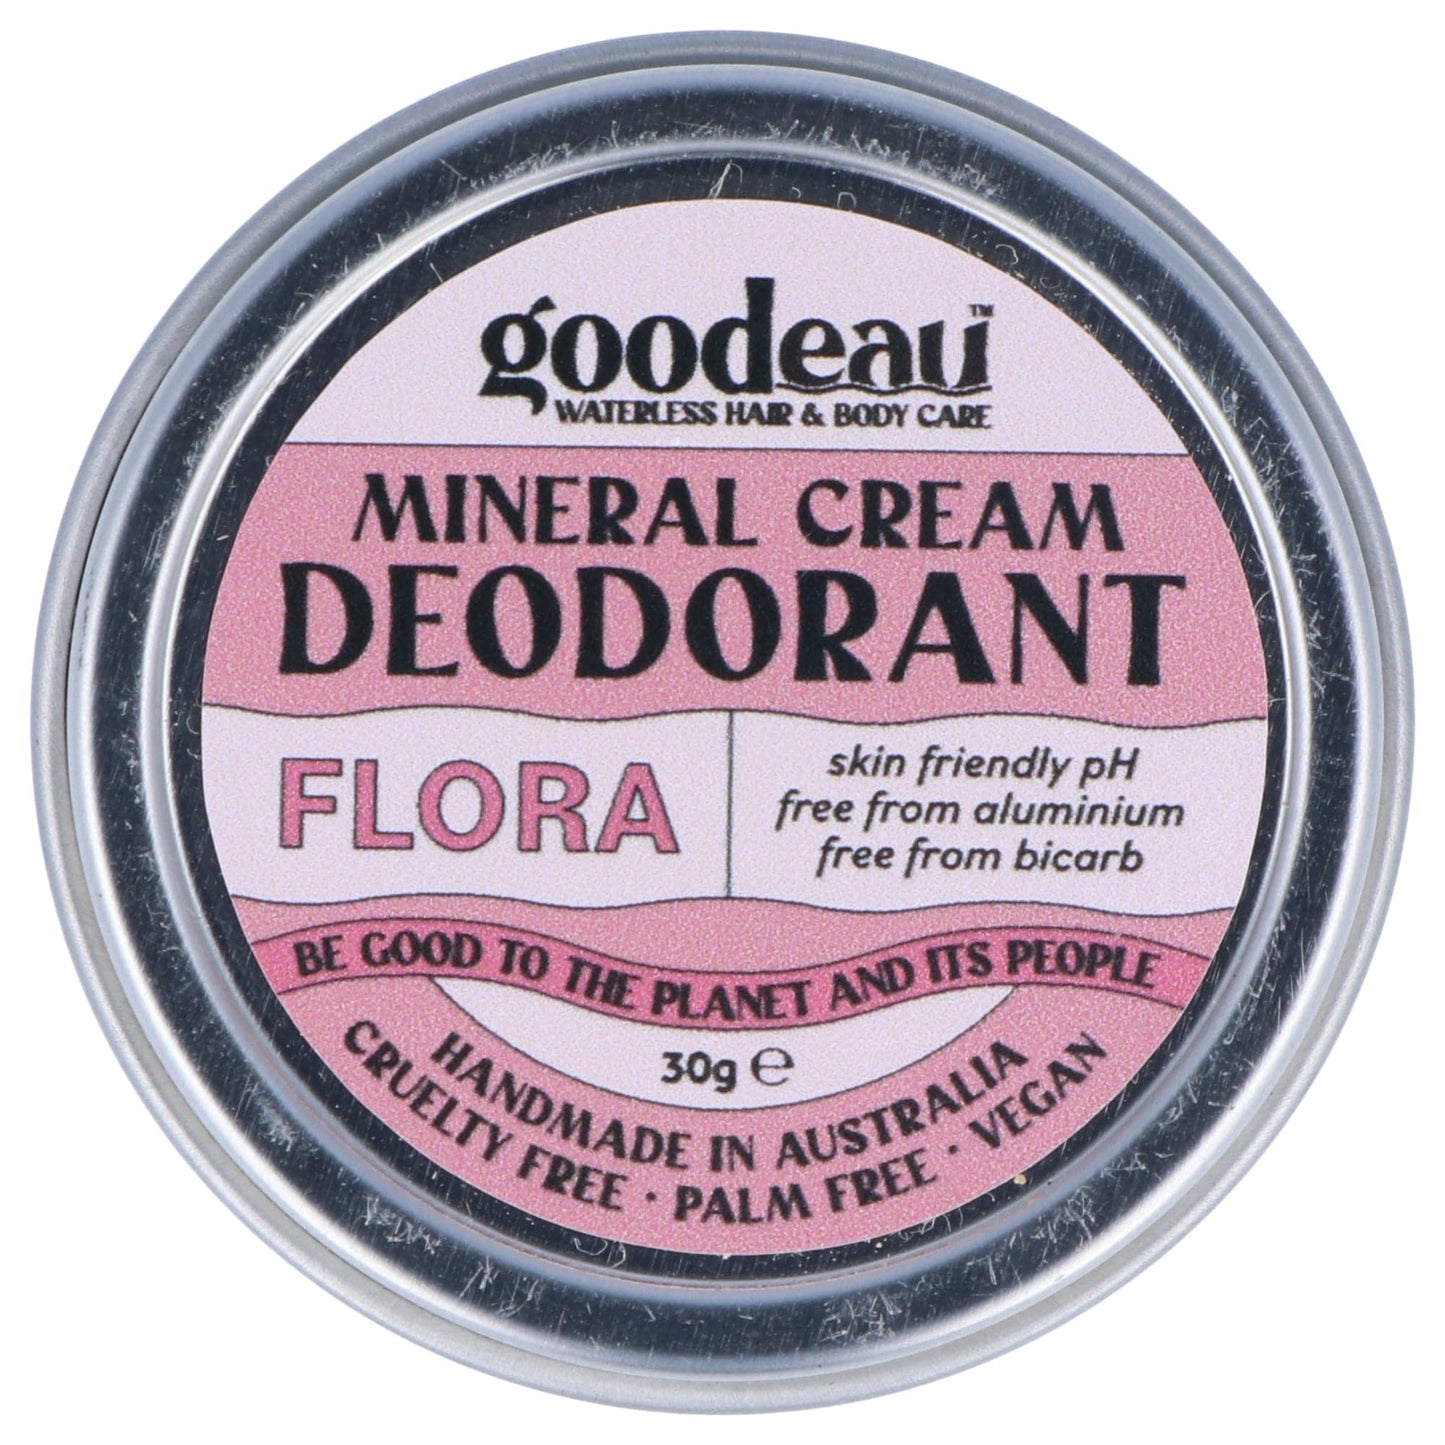 Goodeau MINI Deodorant 30g - Flora